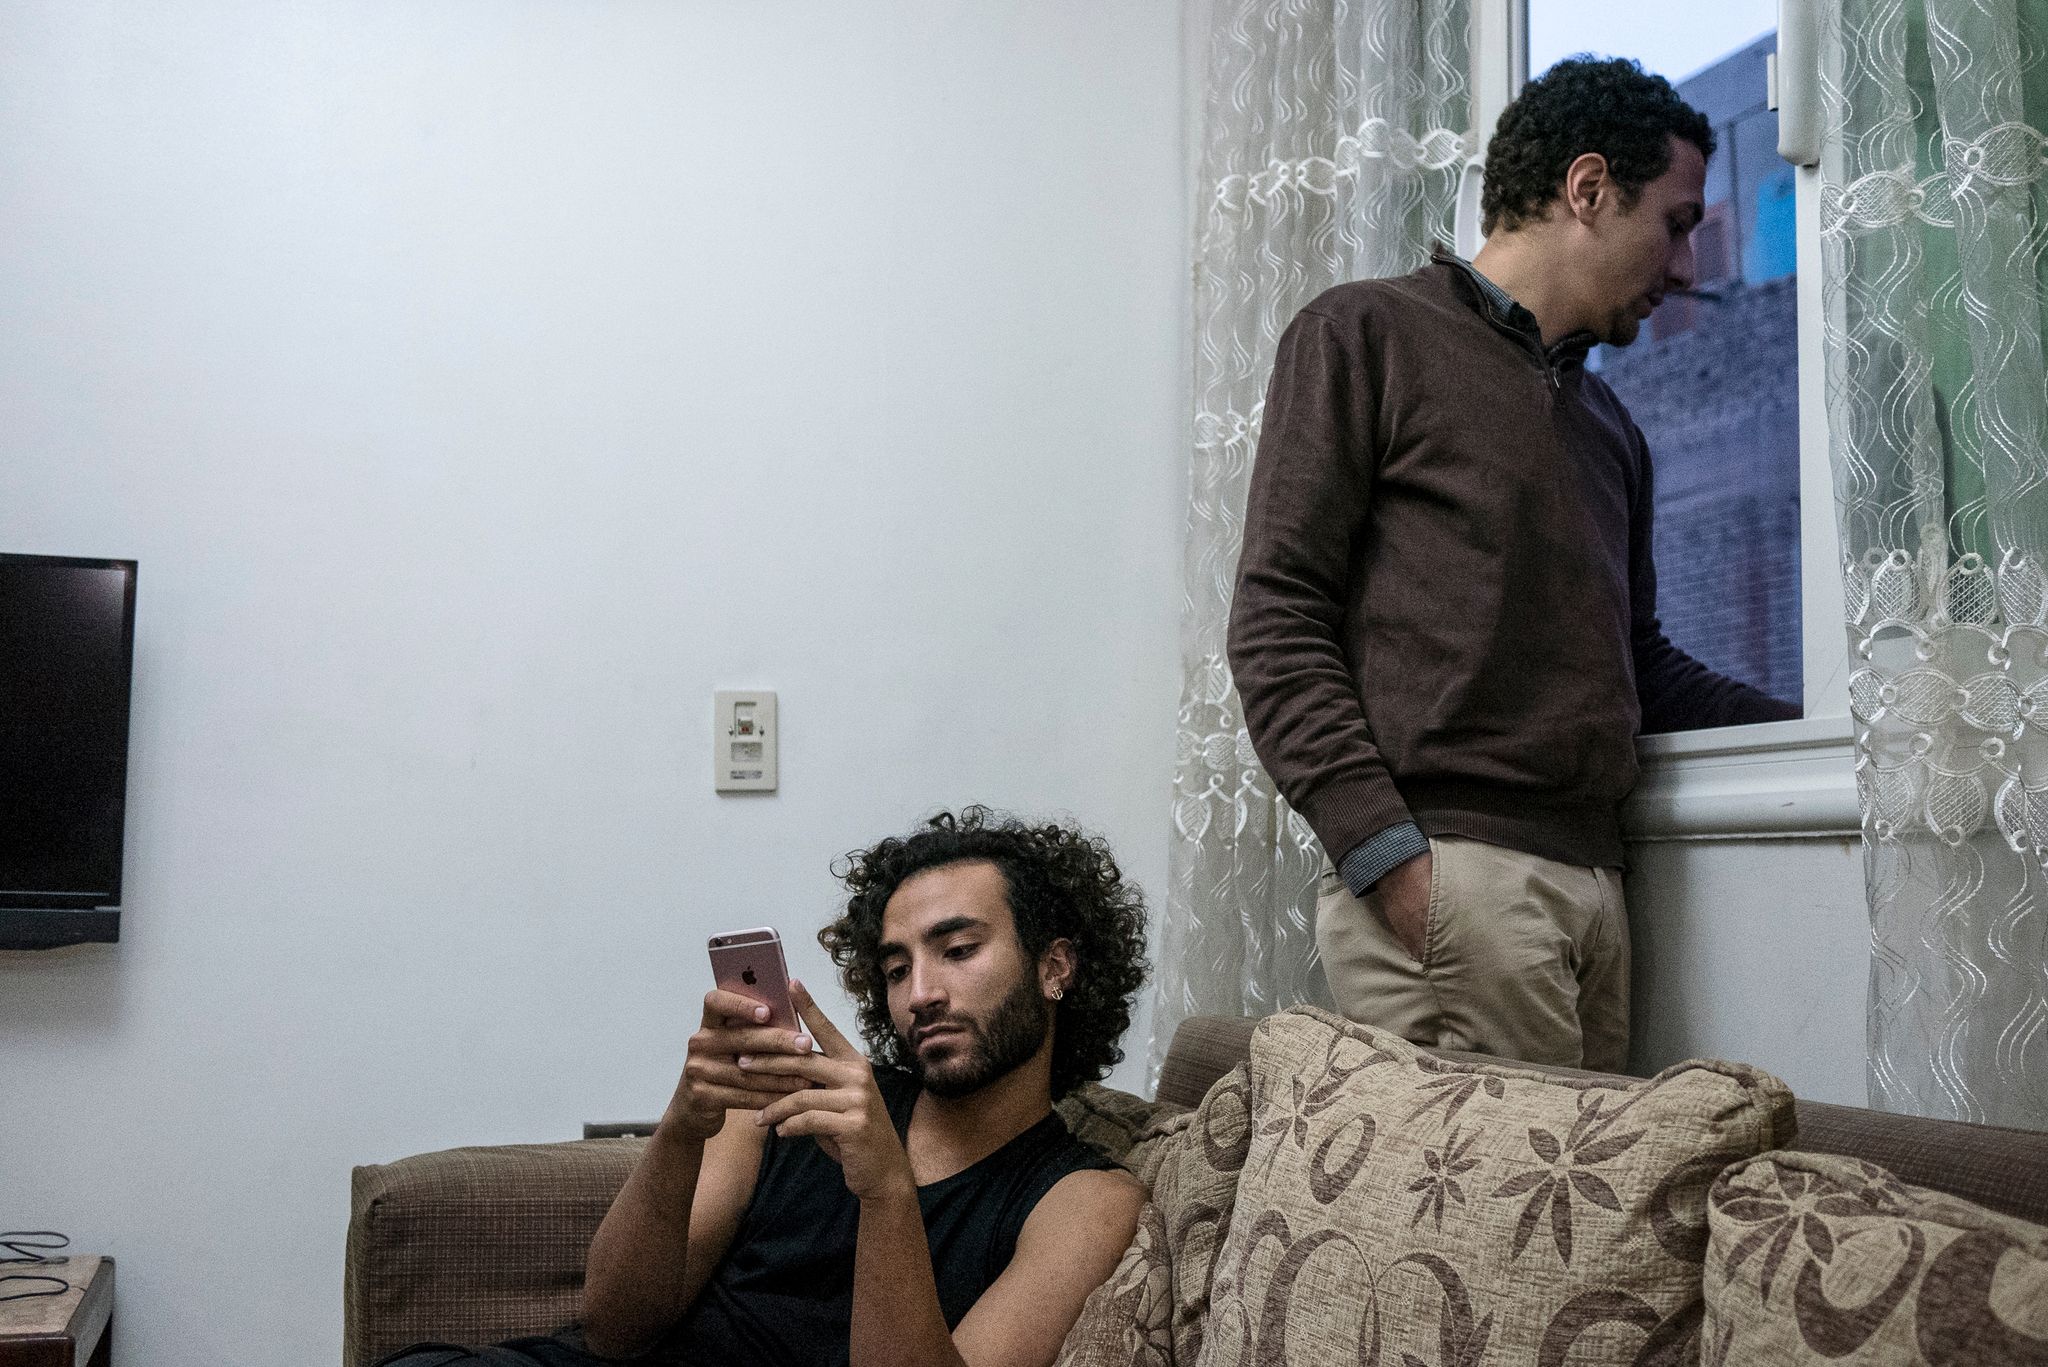 foton arabiska homofile